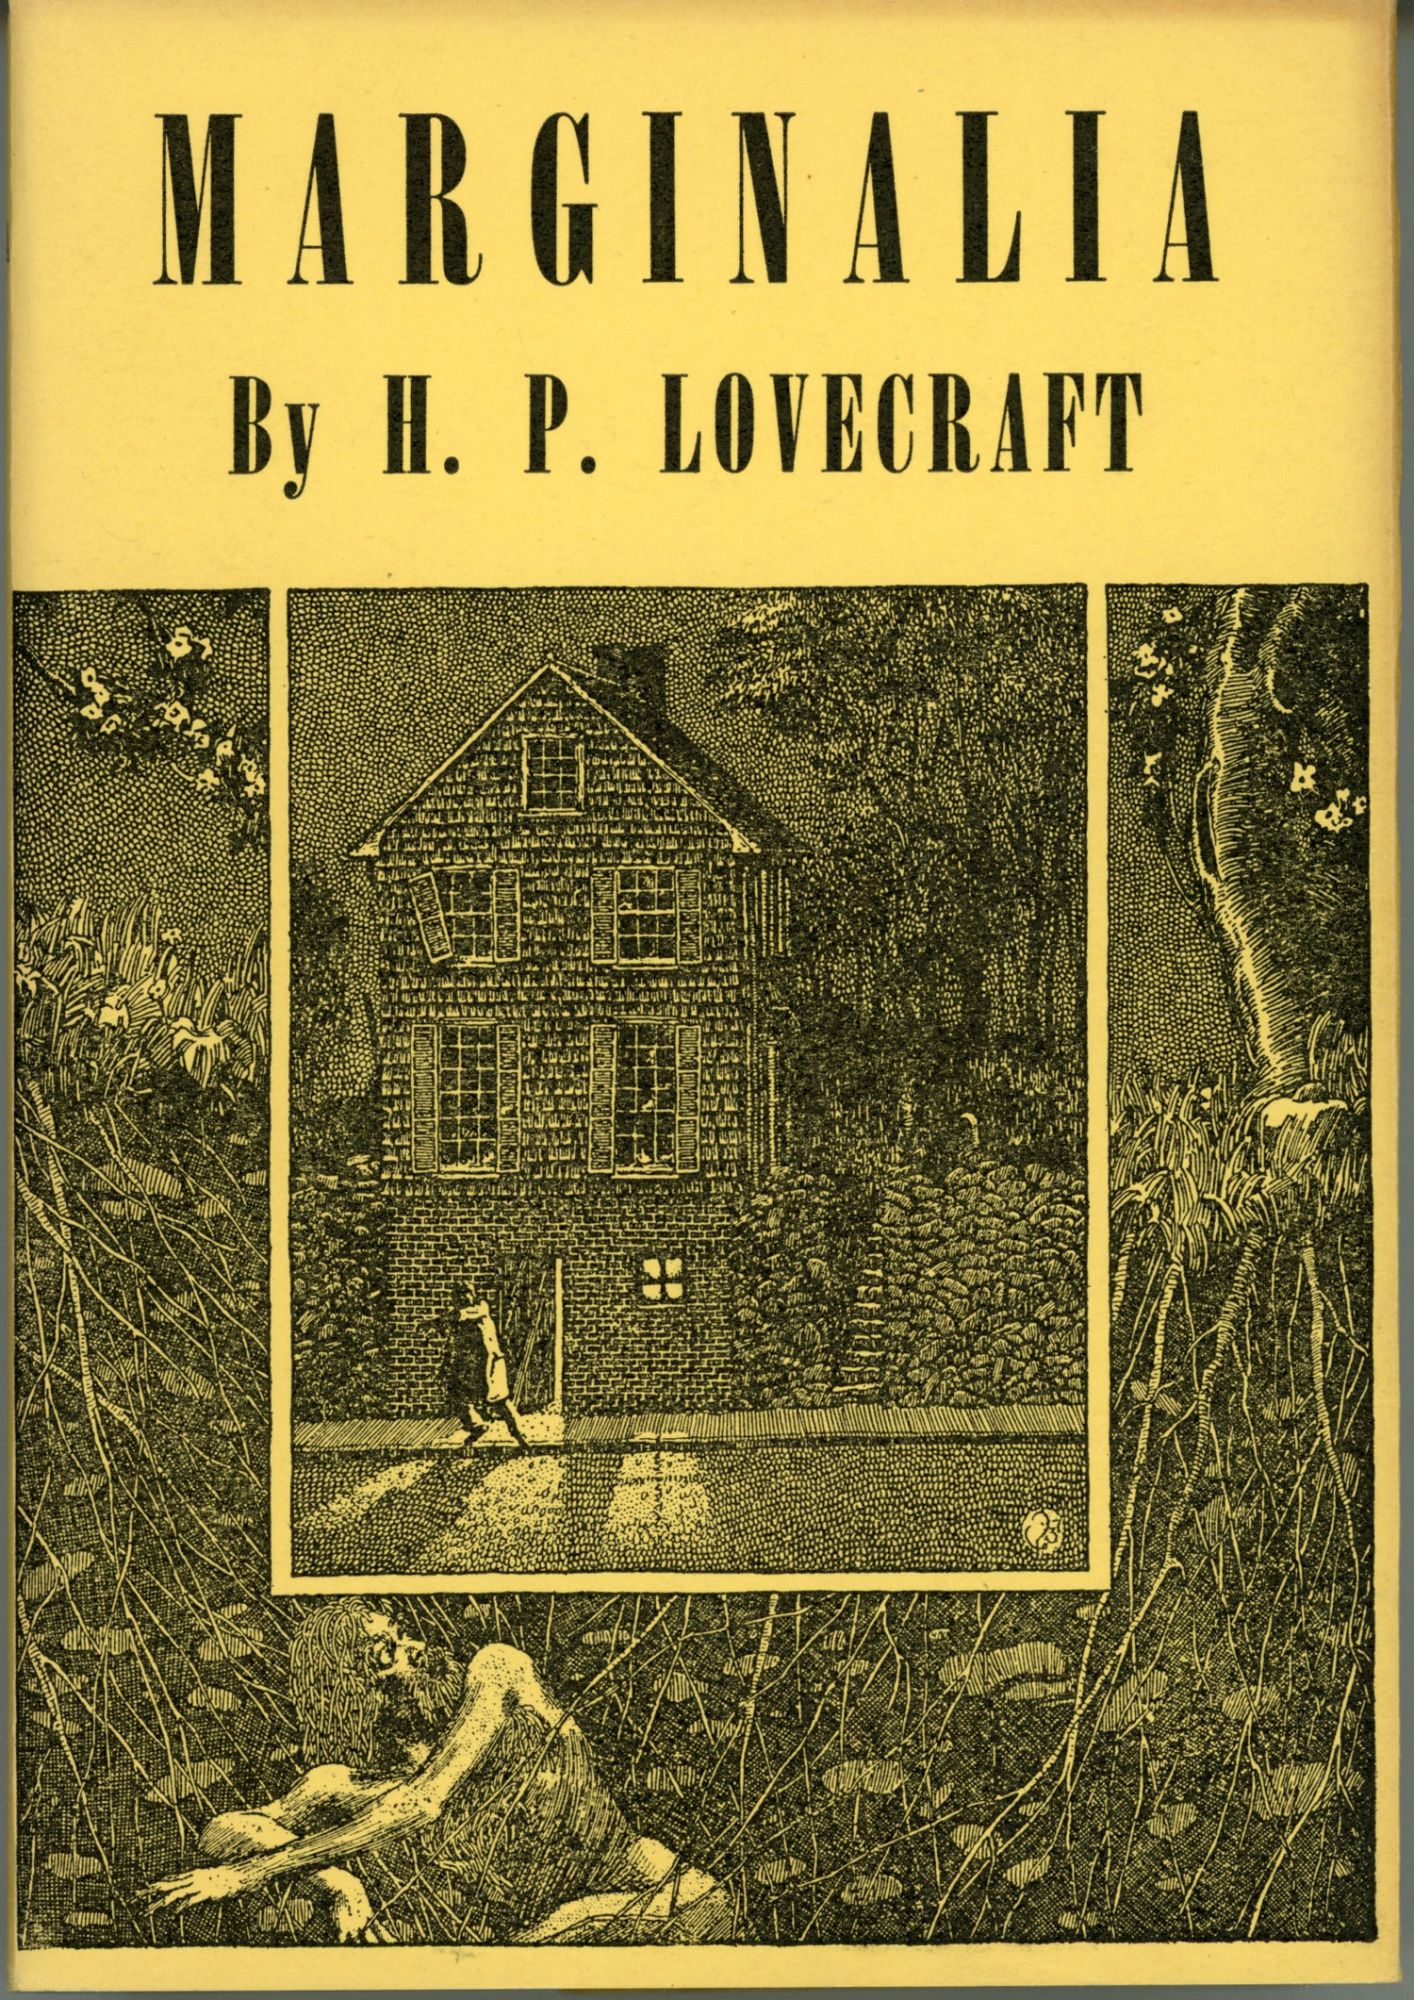 H. P. Lovecraft - Azathoth, 1922